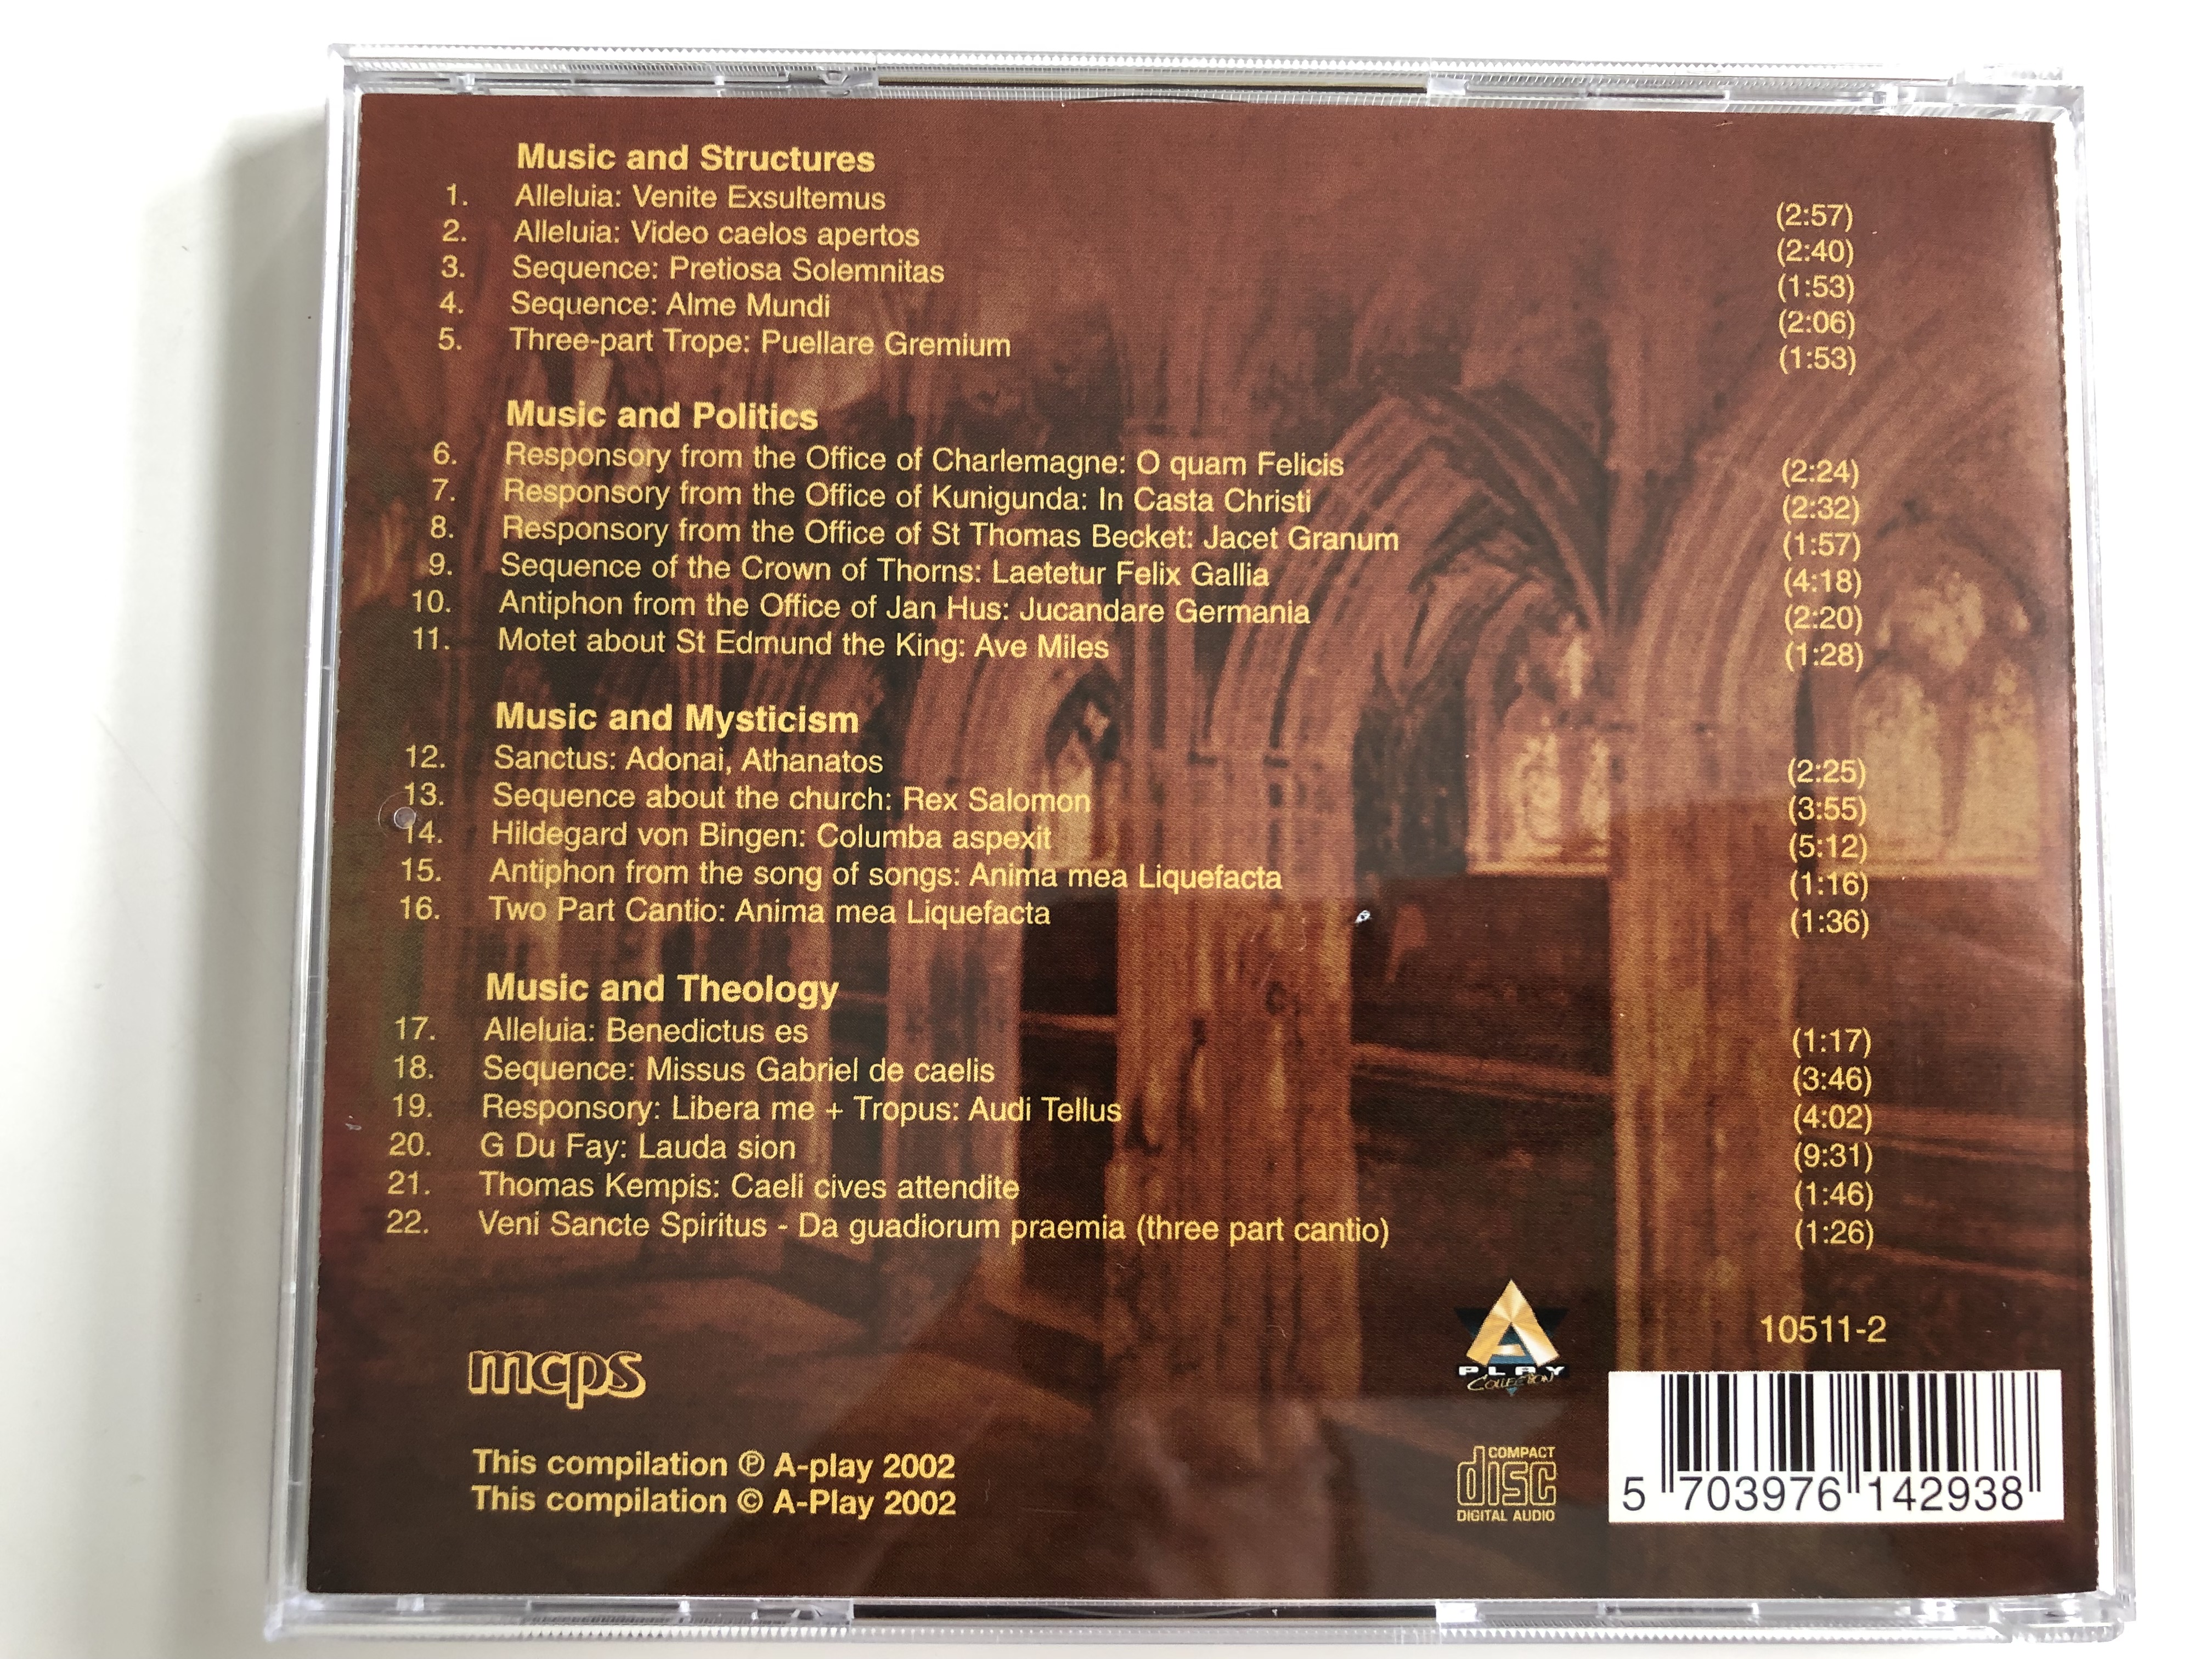 gregorian-chants-classic-schola-hungarica-a-play-audio-cd-2002-10511-2-4-.jpg